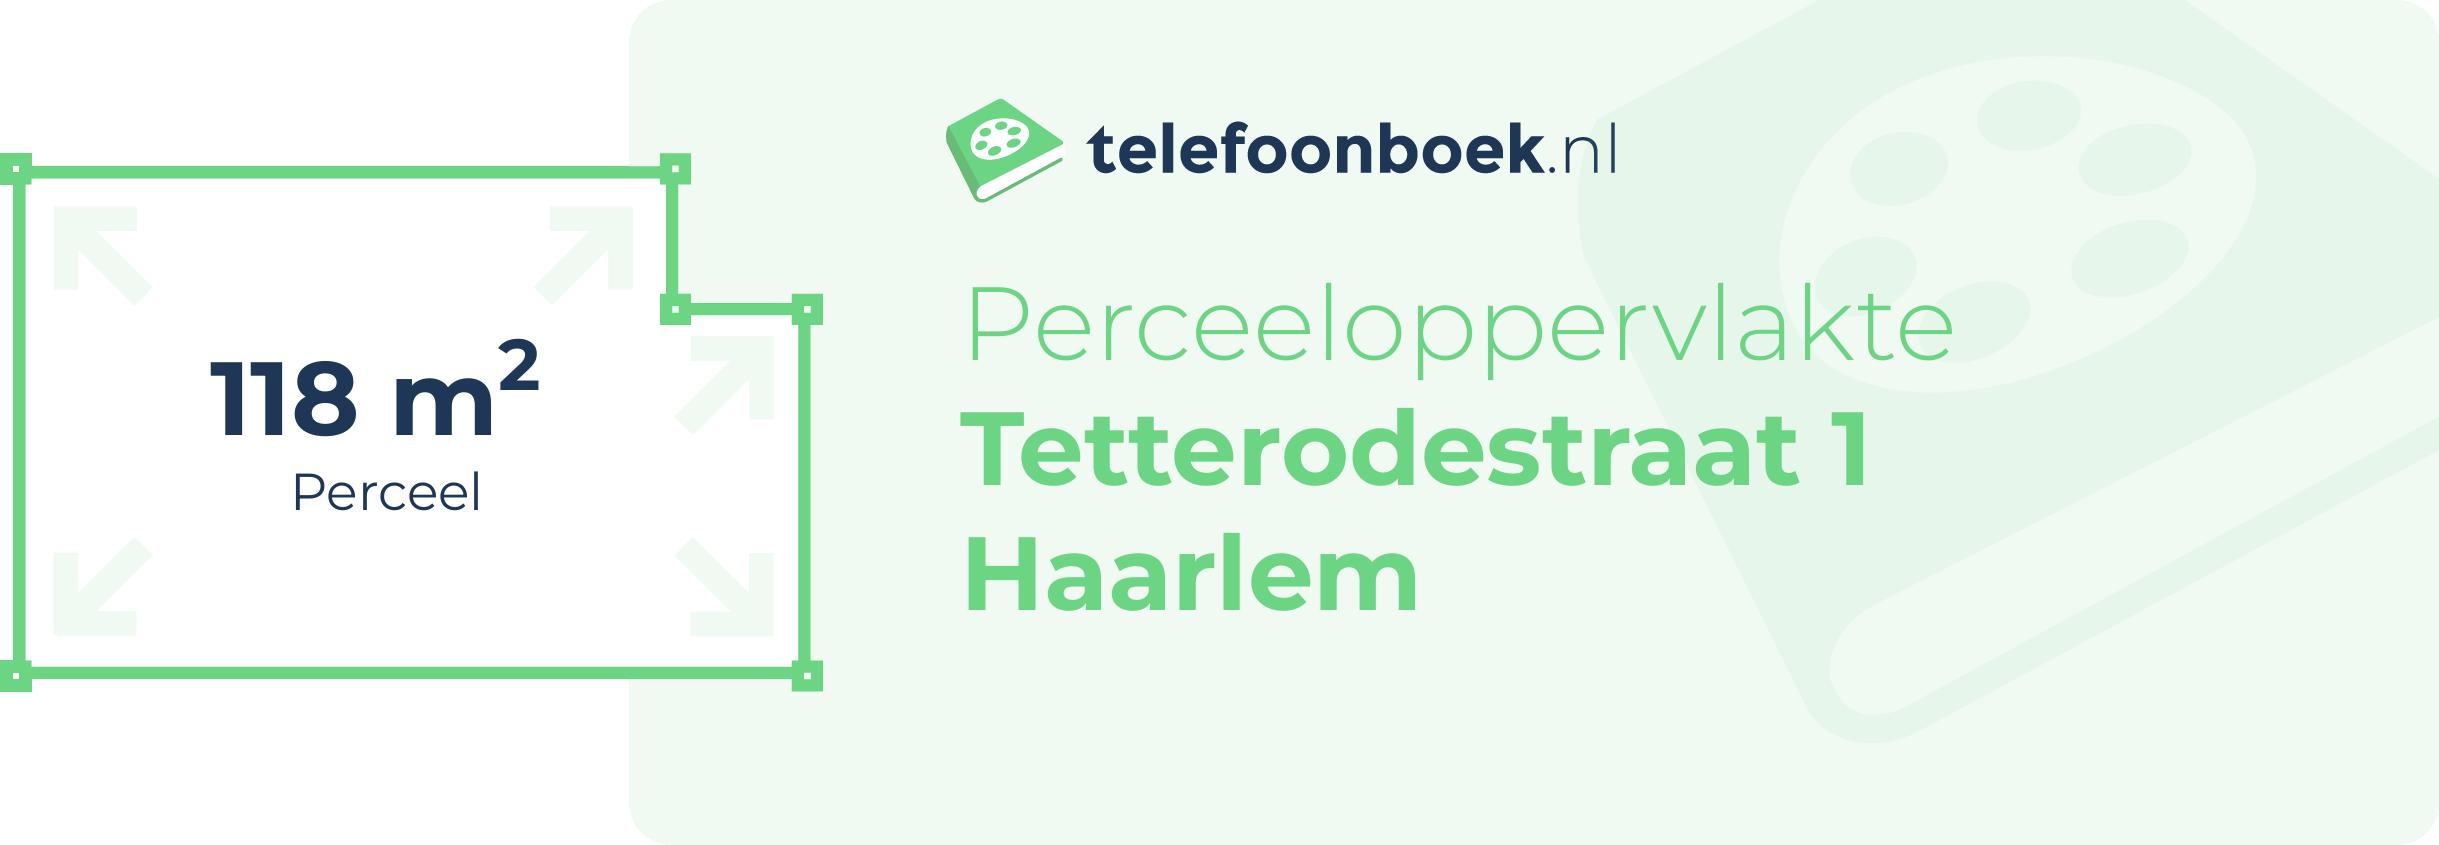 Perceeloppervlakte Tetterodestraat 1 Haarlem